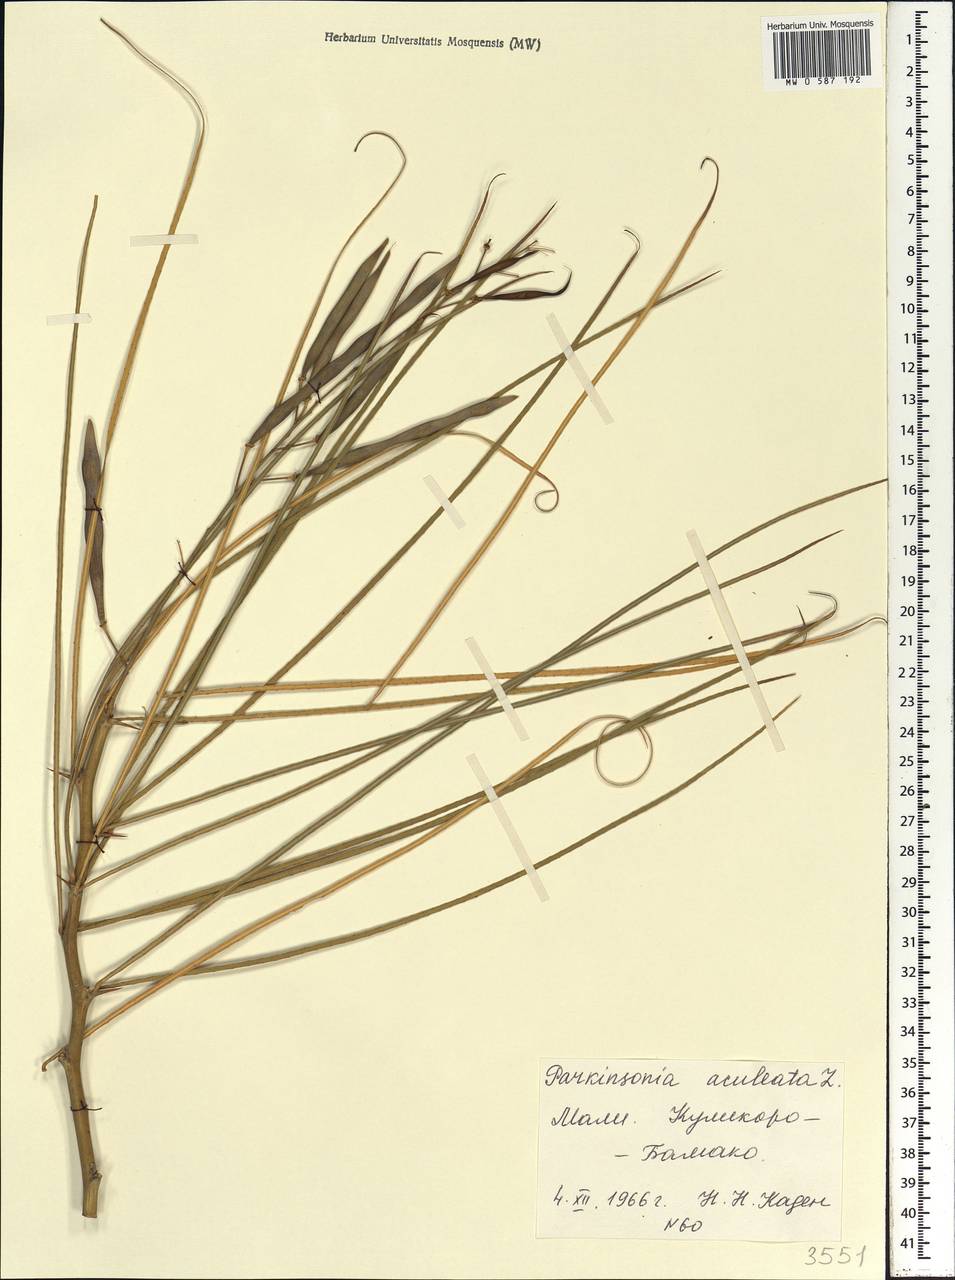 Parkinsonia aculeata L., Africa (AFR) (Mali)